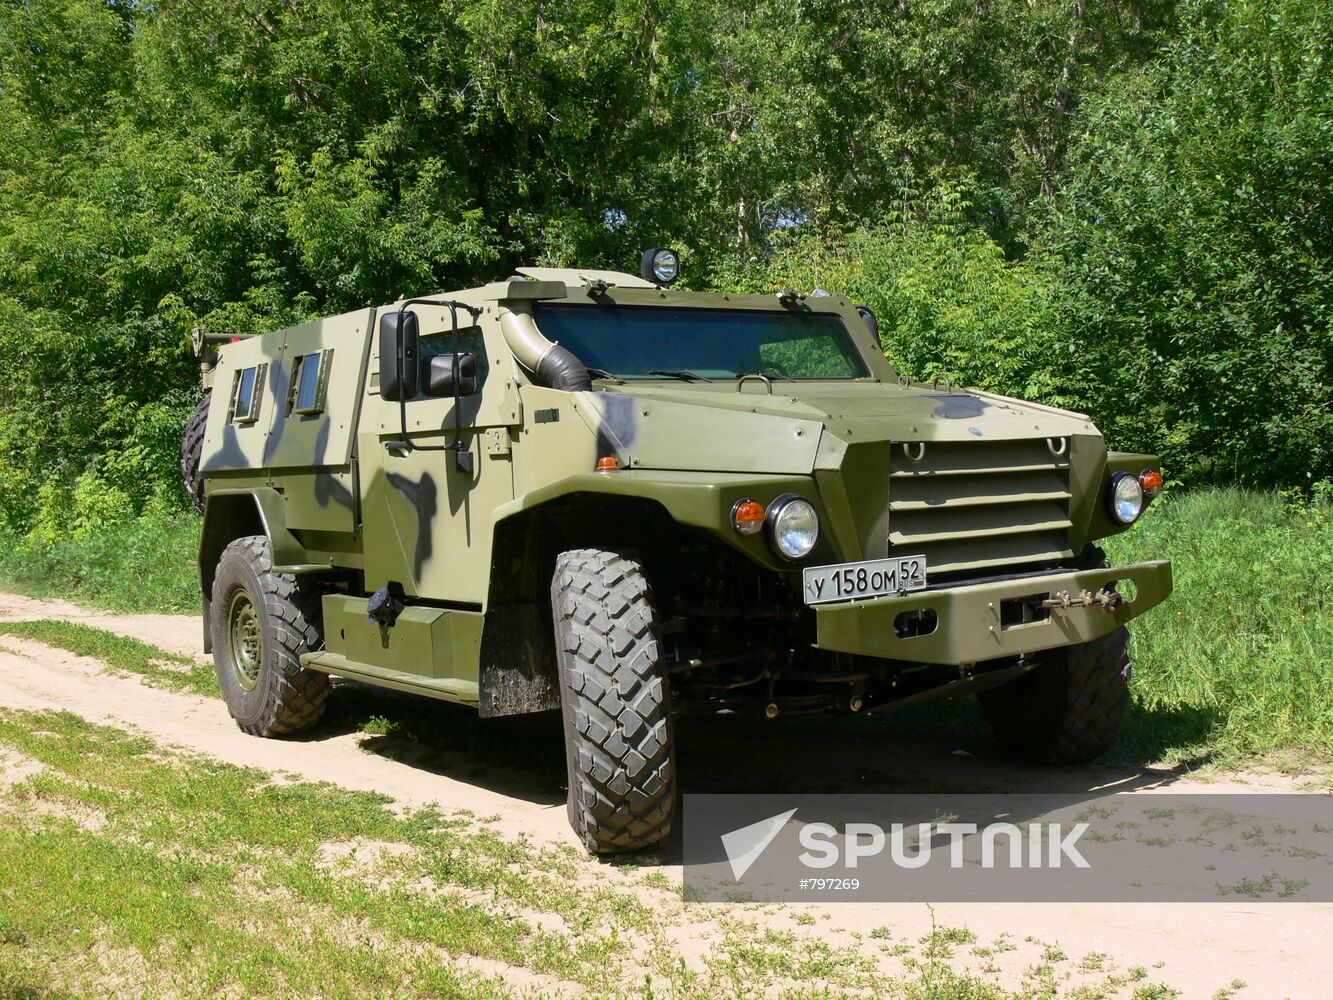 Volk I (Wolf I) VPK-3927 modular protected vehicle